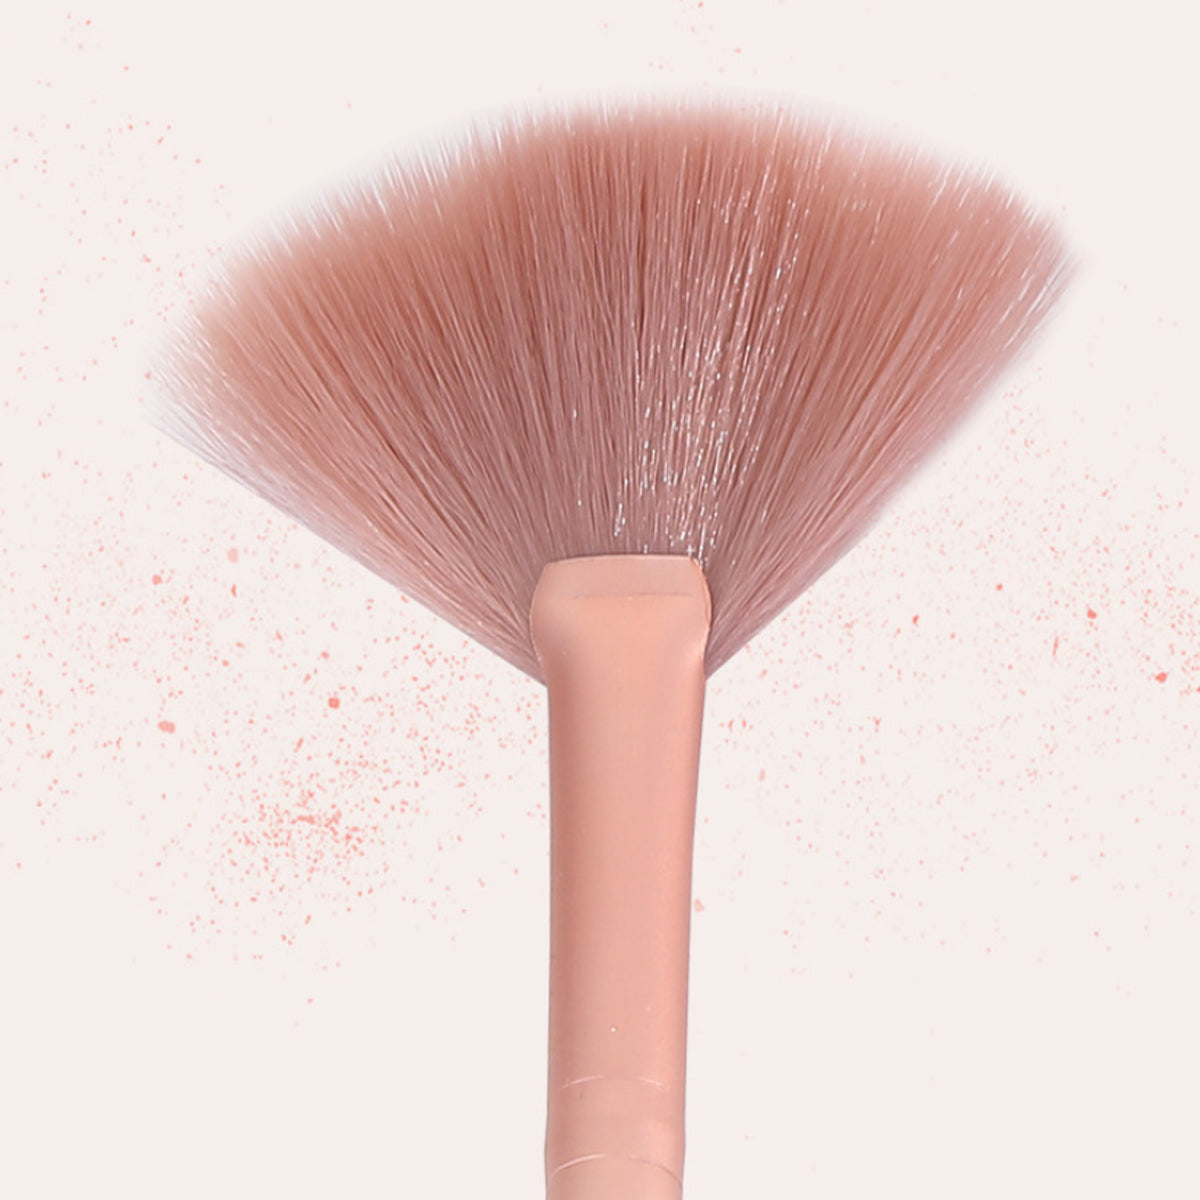 Studio Style 12 in 1 MakeUp Brush by VistaShops